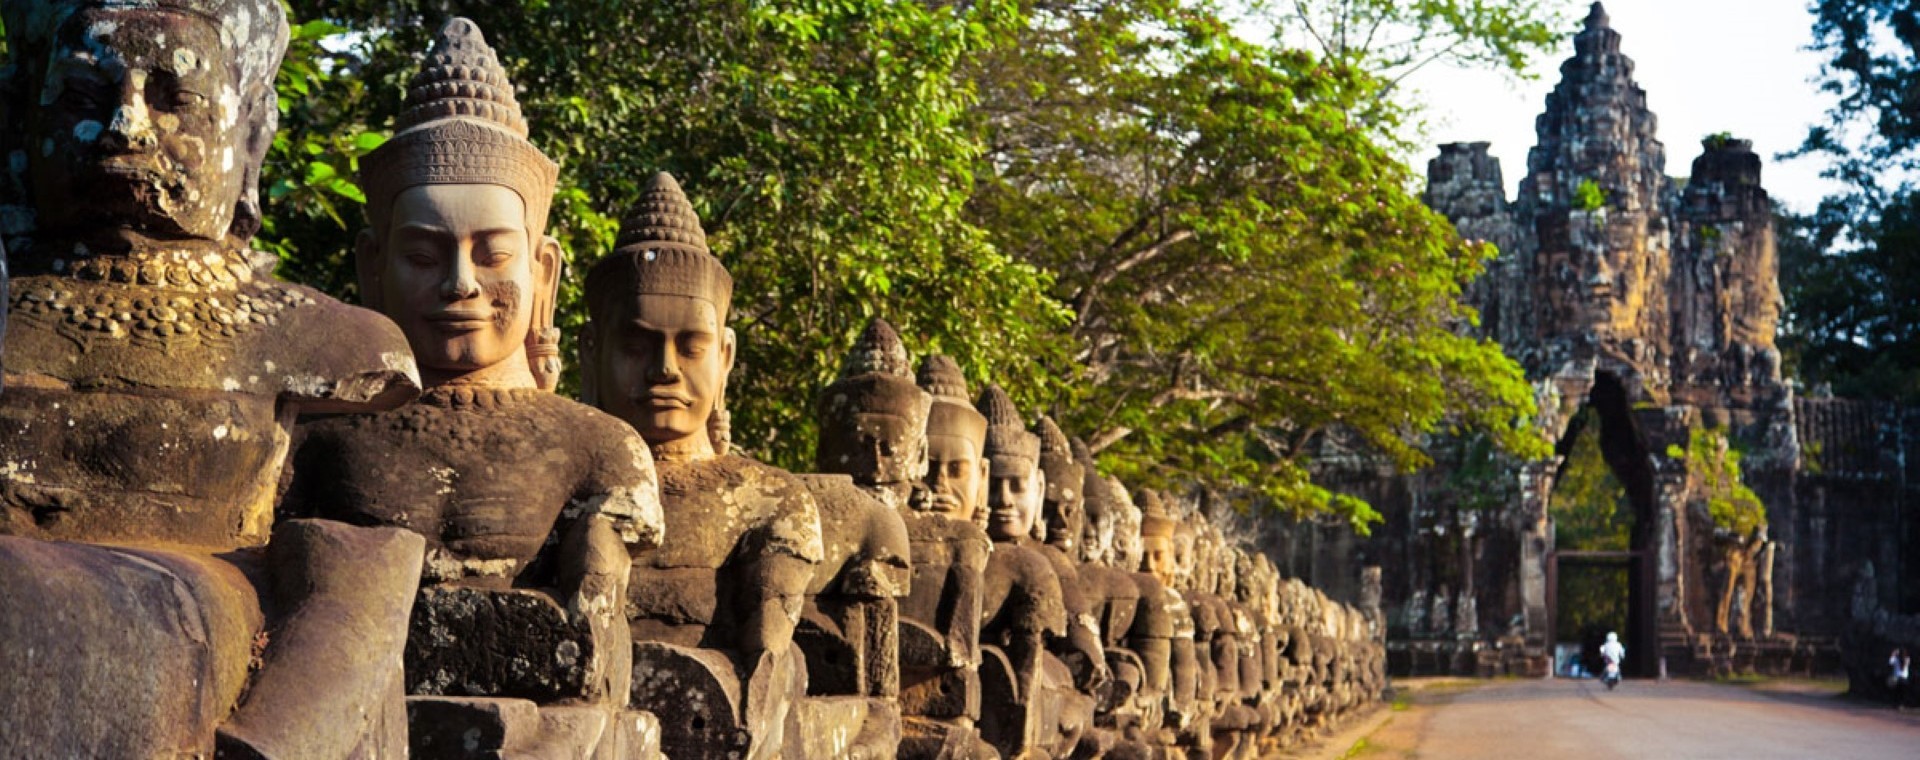 Cambodia Classic Tour: Phnom Penh to Siem Reap 7 days 6 nights